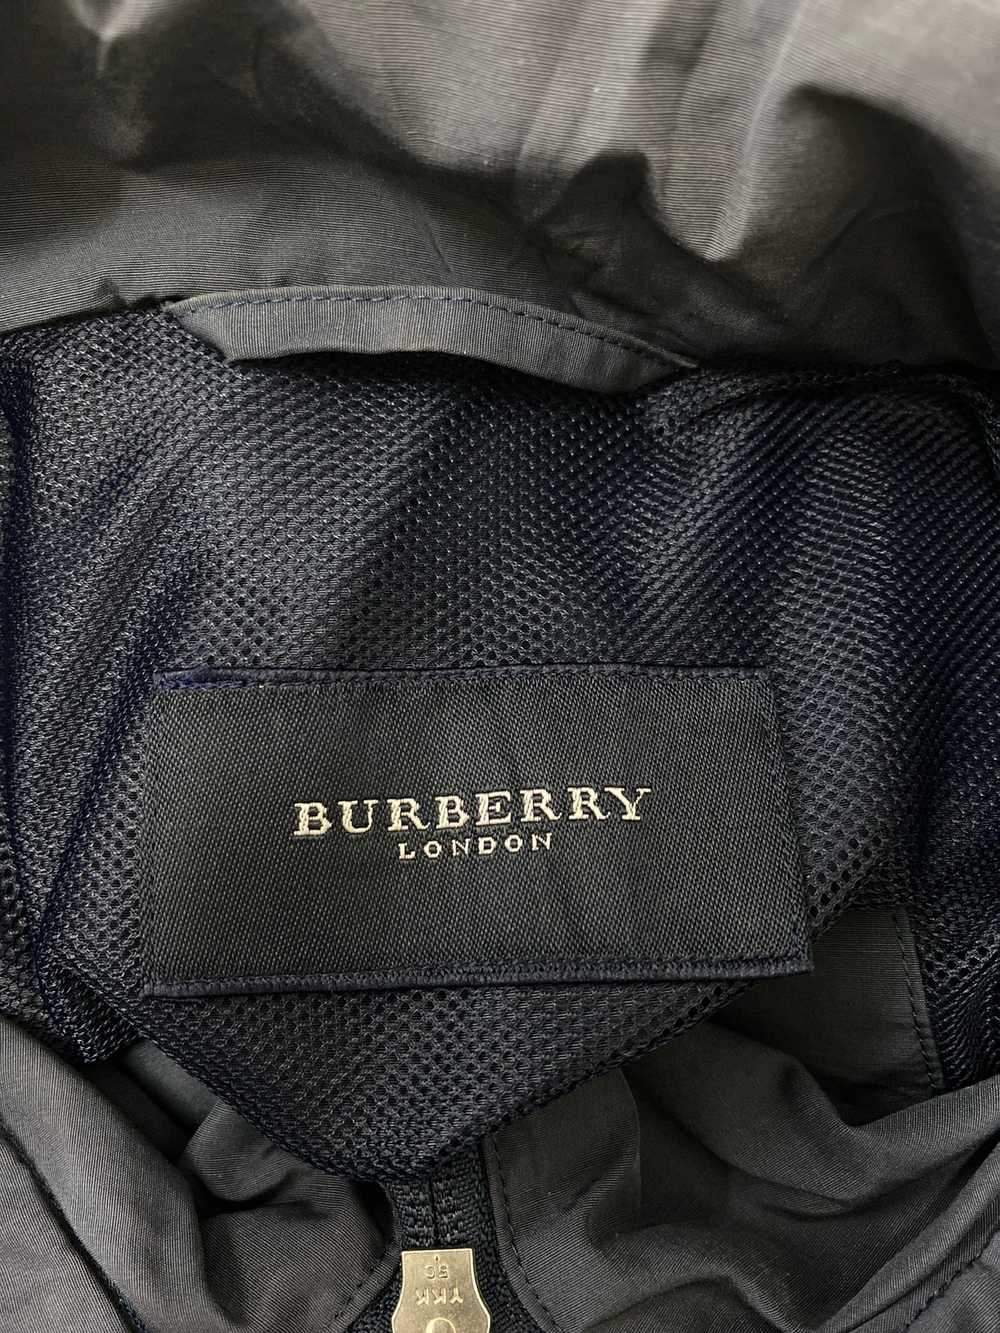 Burberry london nylon vest style - image 4